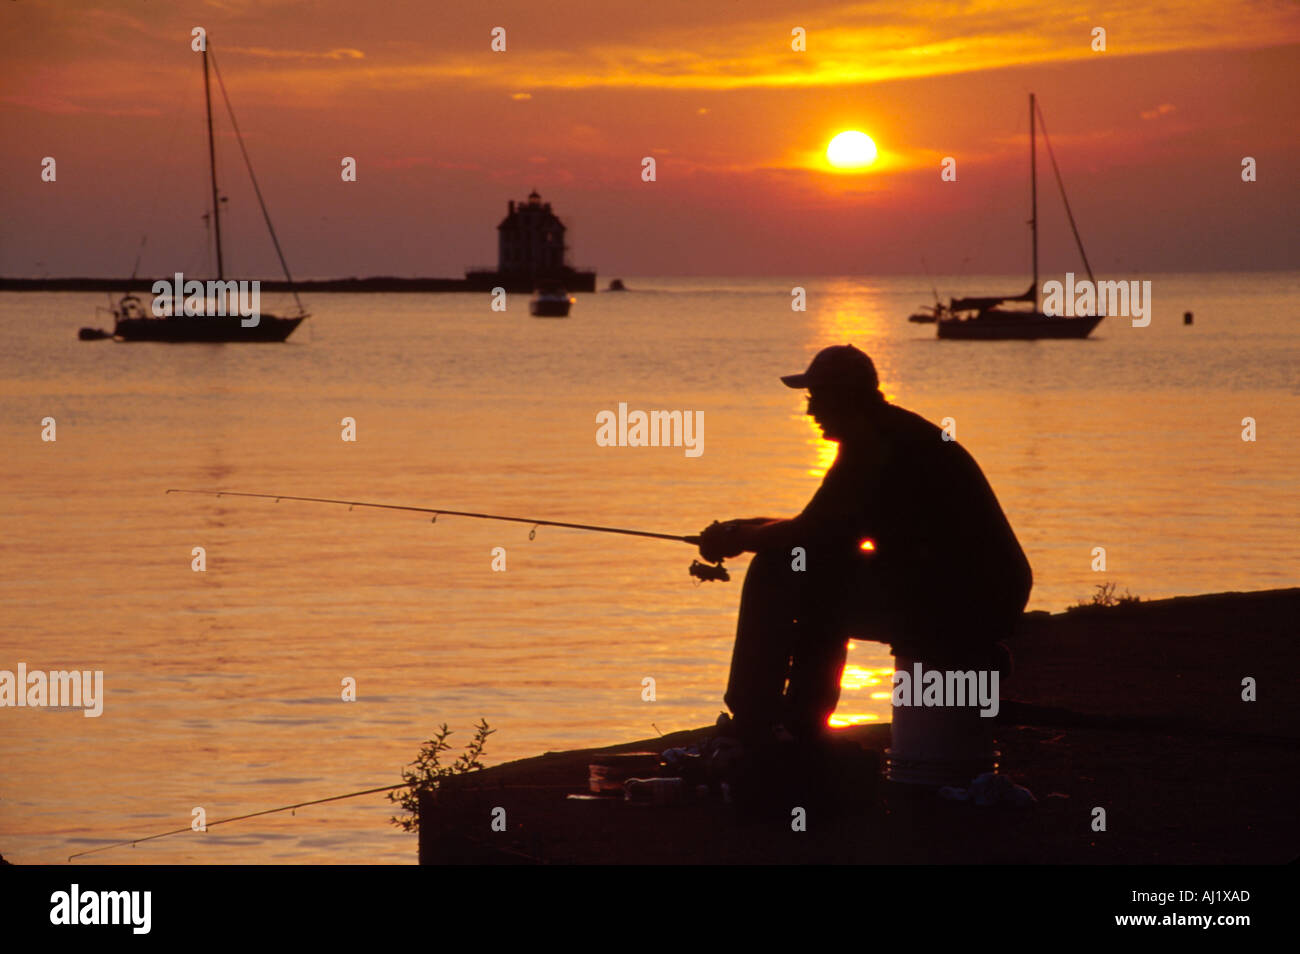 Ohio Lake Erie Lorain Lakeside Landing Marina sunset,scenic,nature,natural,scenery,countryside,landscape,nature,natural,fishing,sport,athlete,recreati Stock Photo